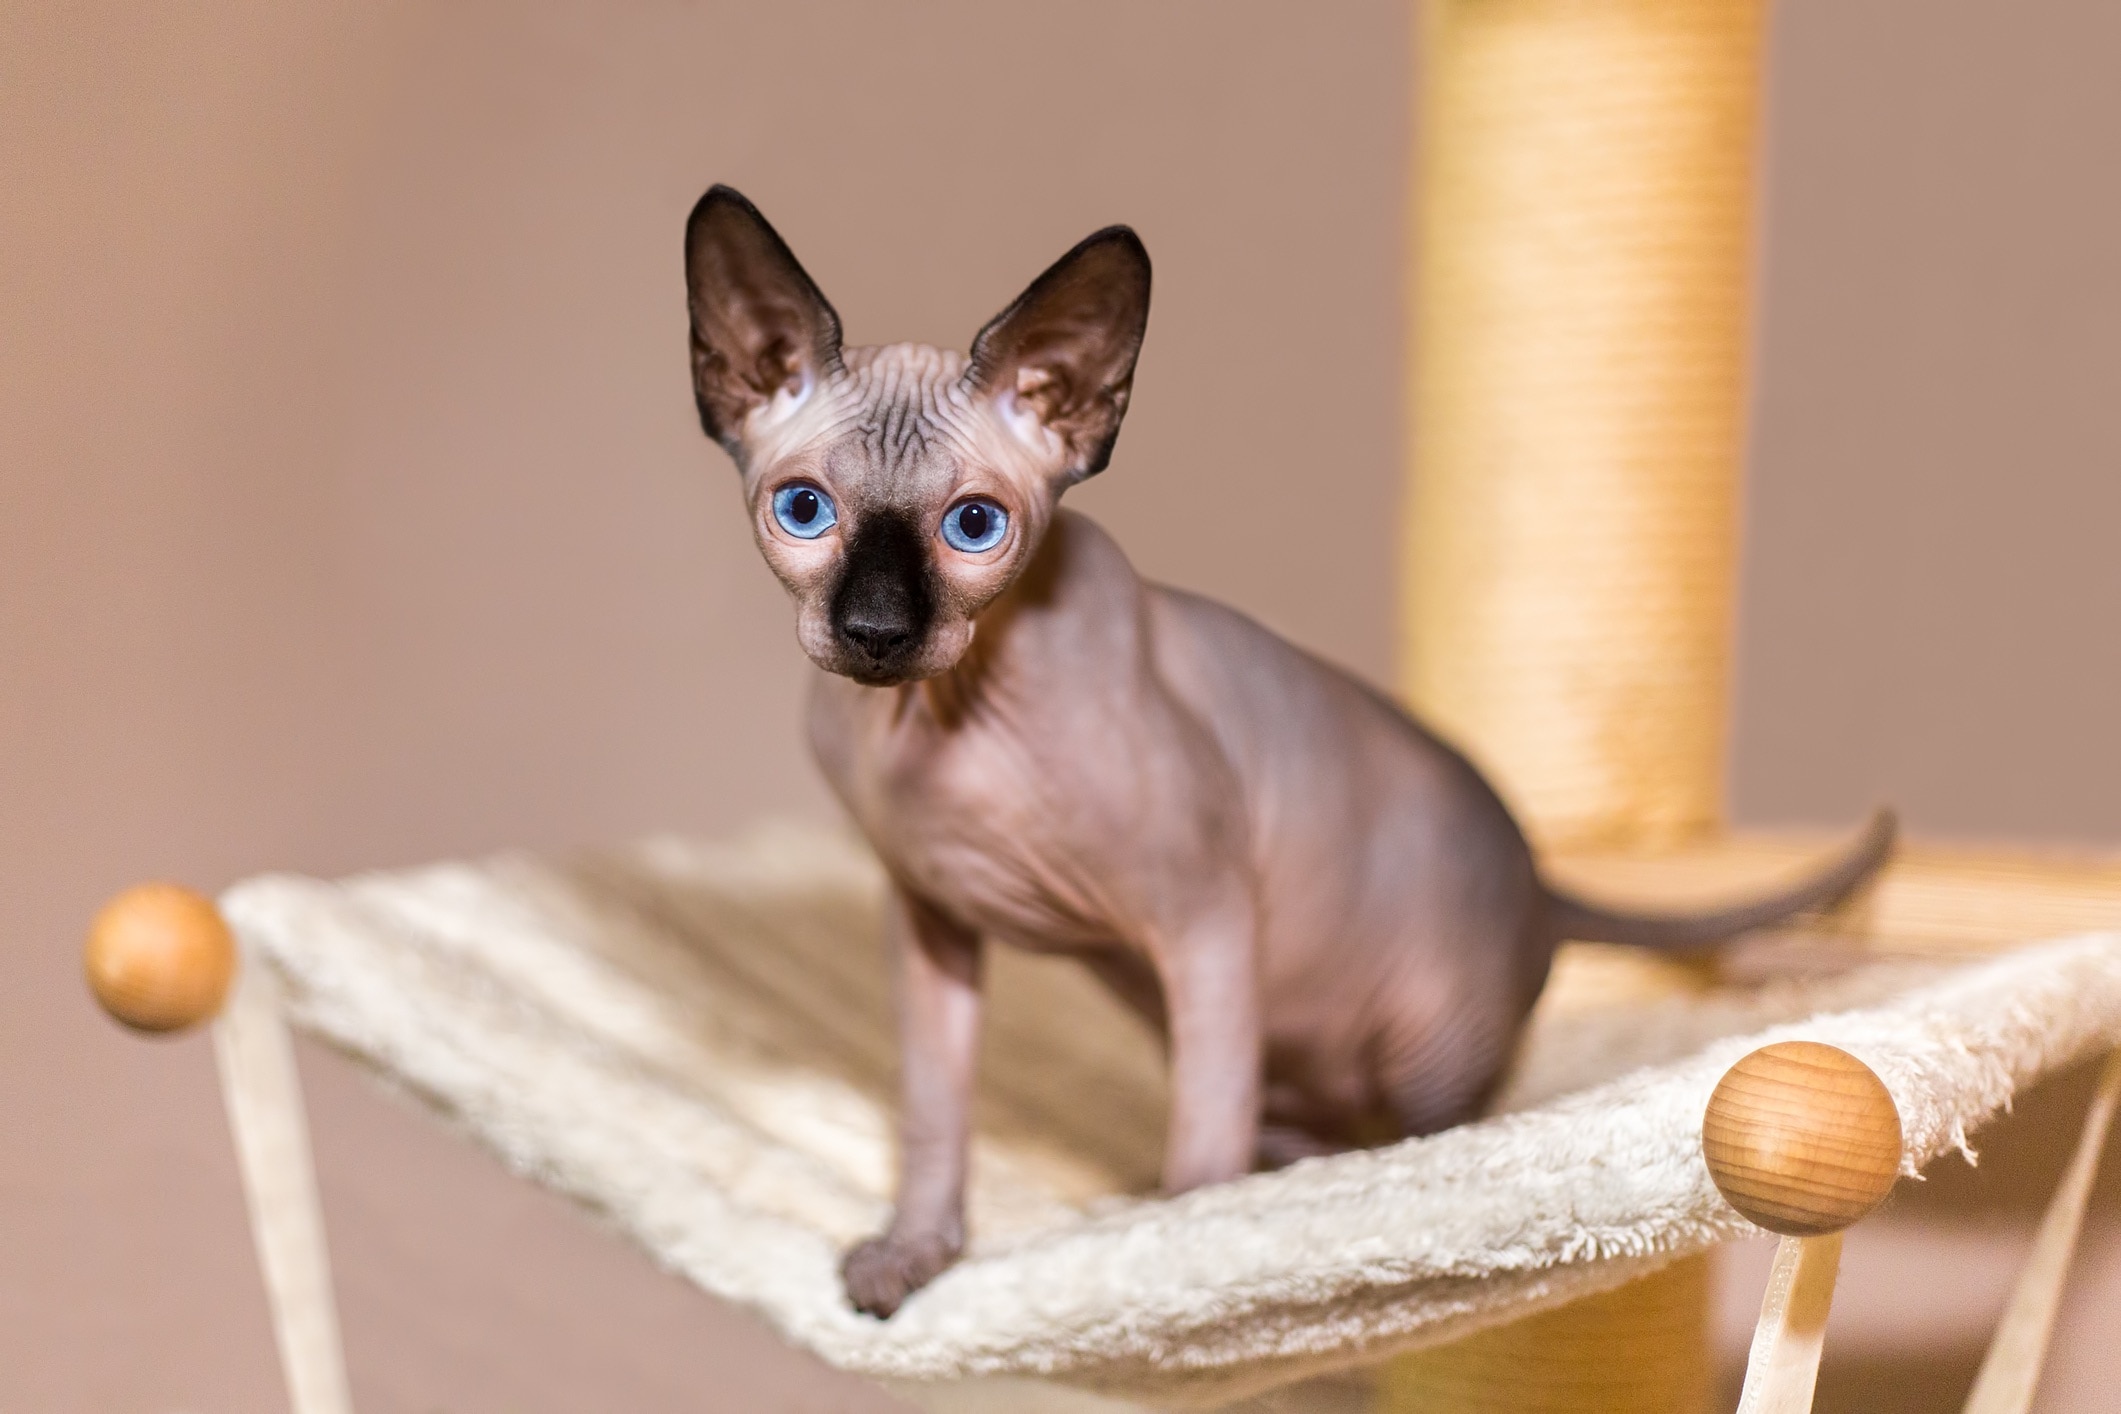 sphynx kitten with blue eyes sitting on a cat hammock